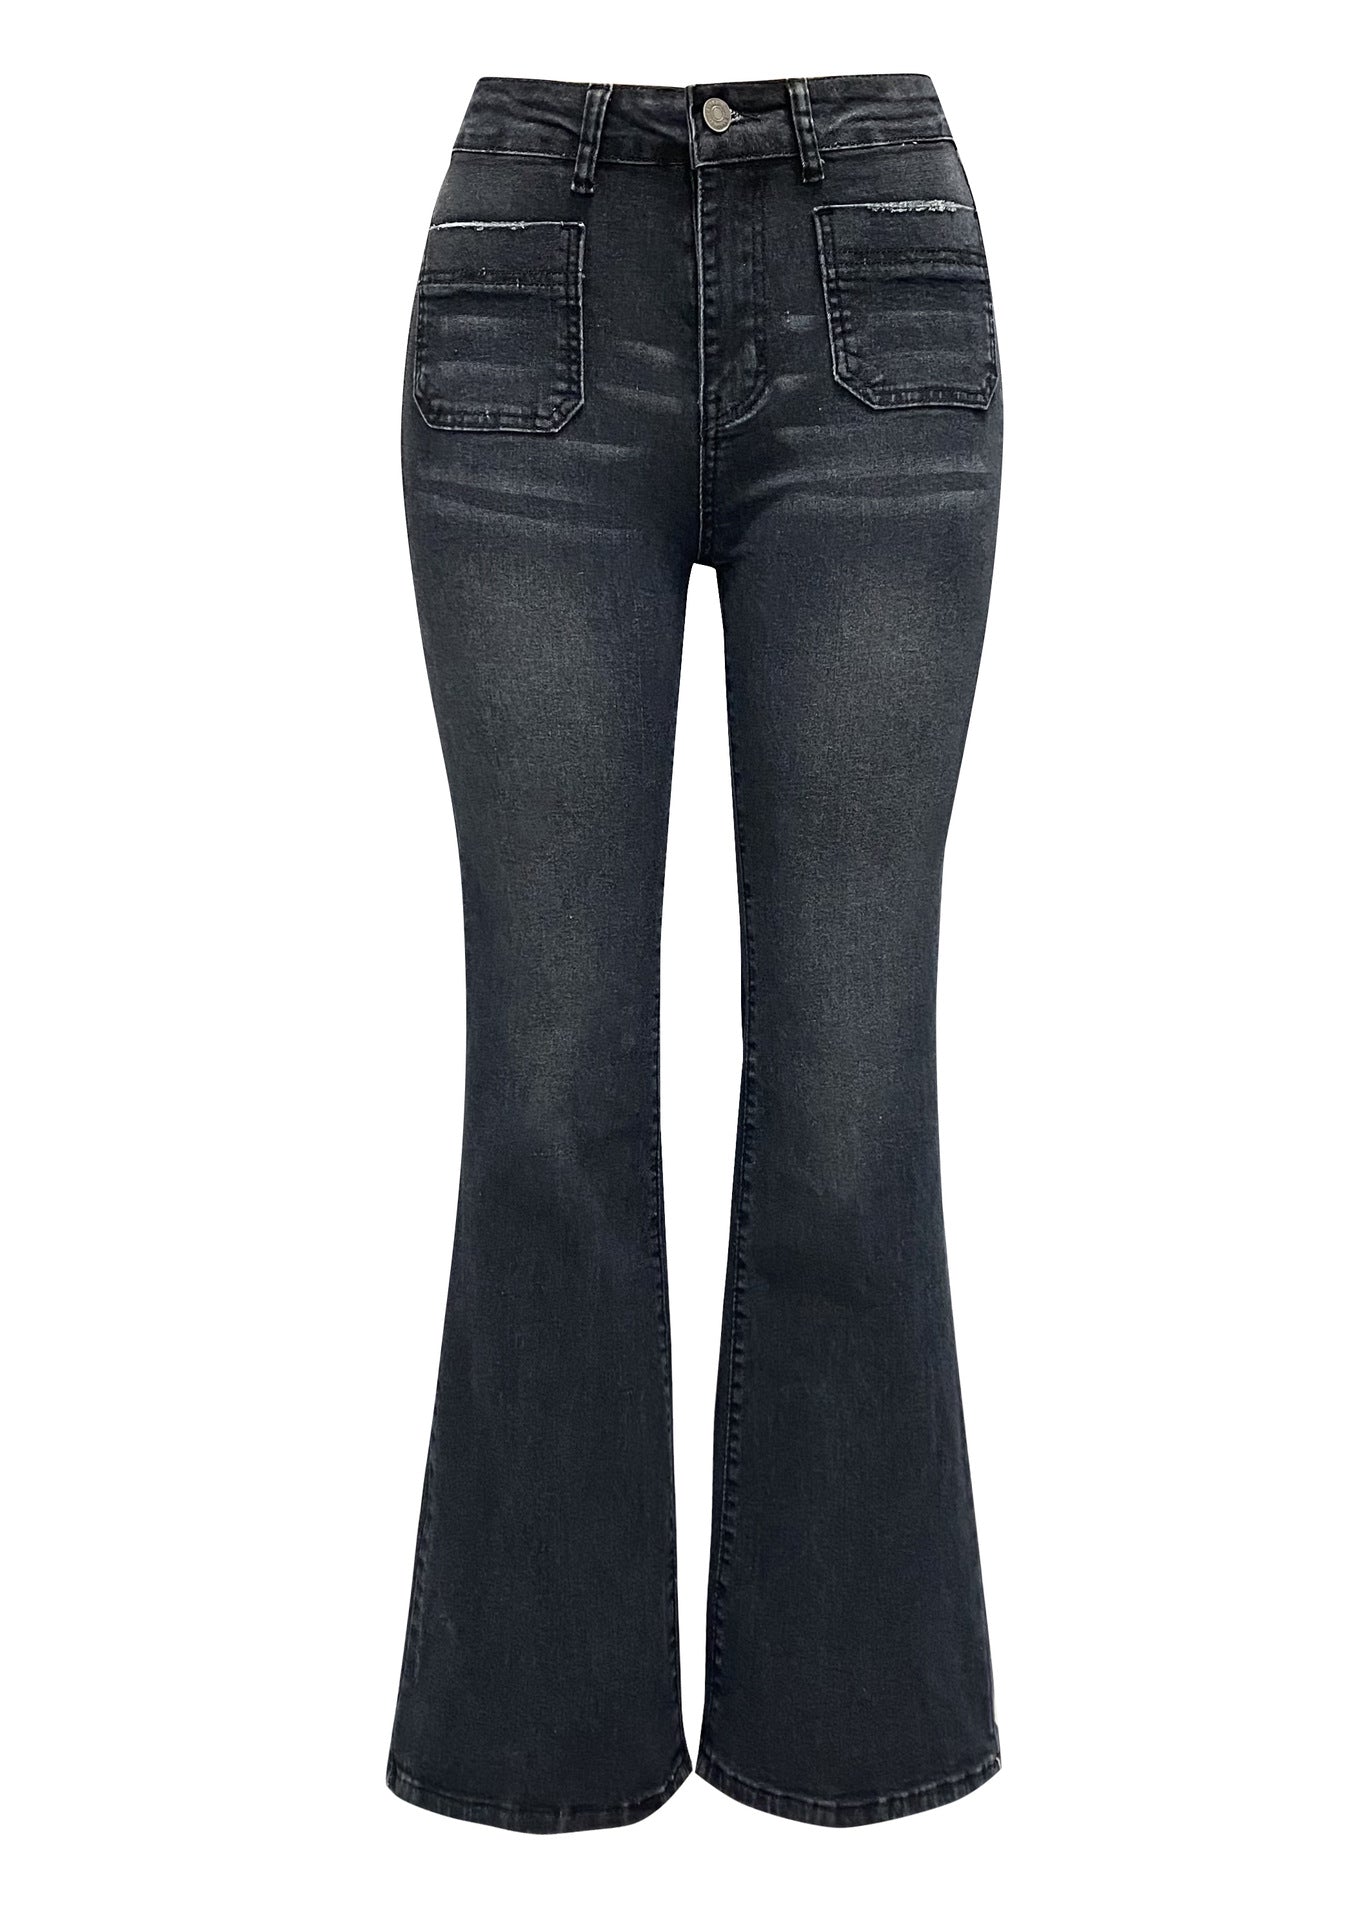 Retro black denim flare jeans